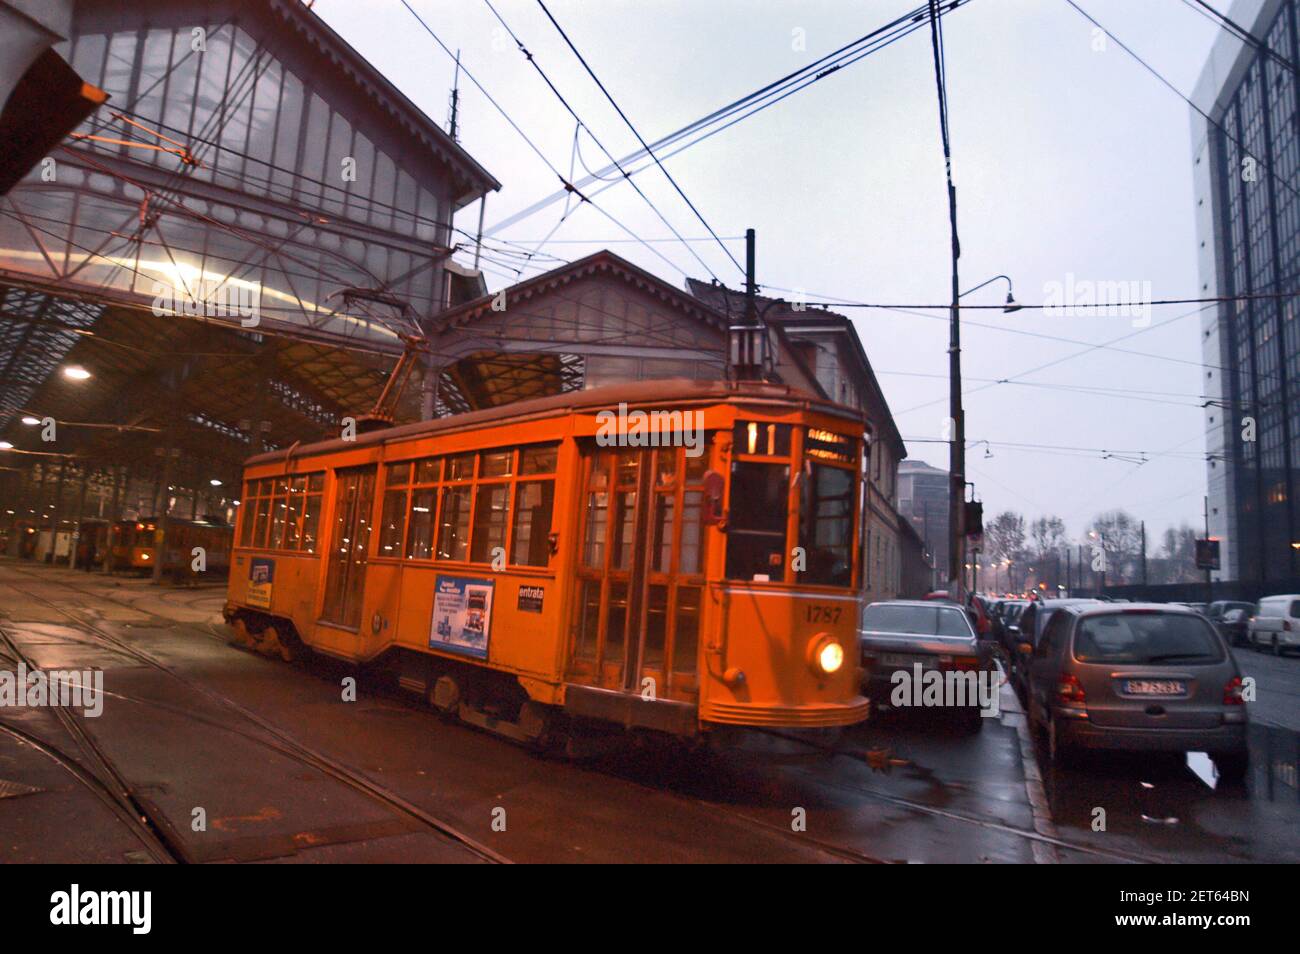 Milan (Italie), dépôt de tram dans la rue Messina Banque D'Images